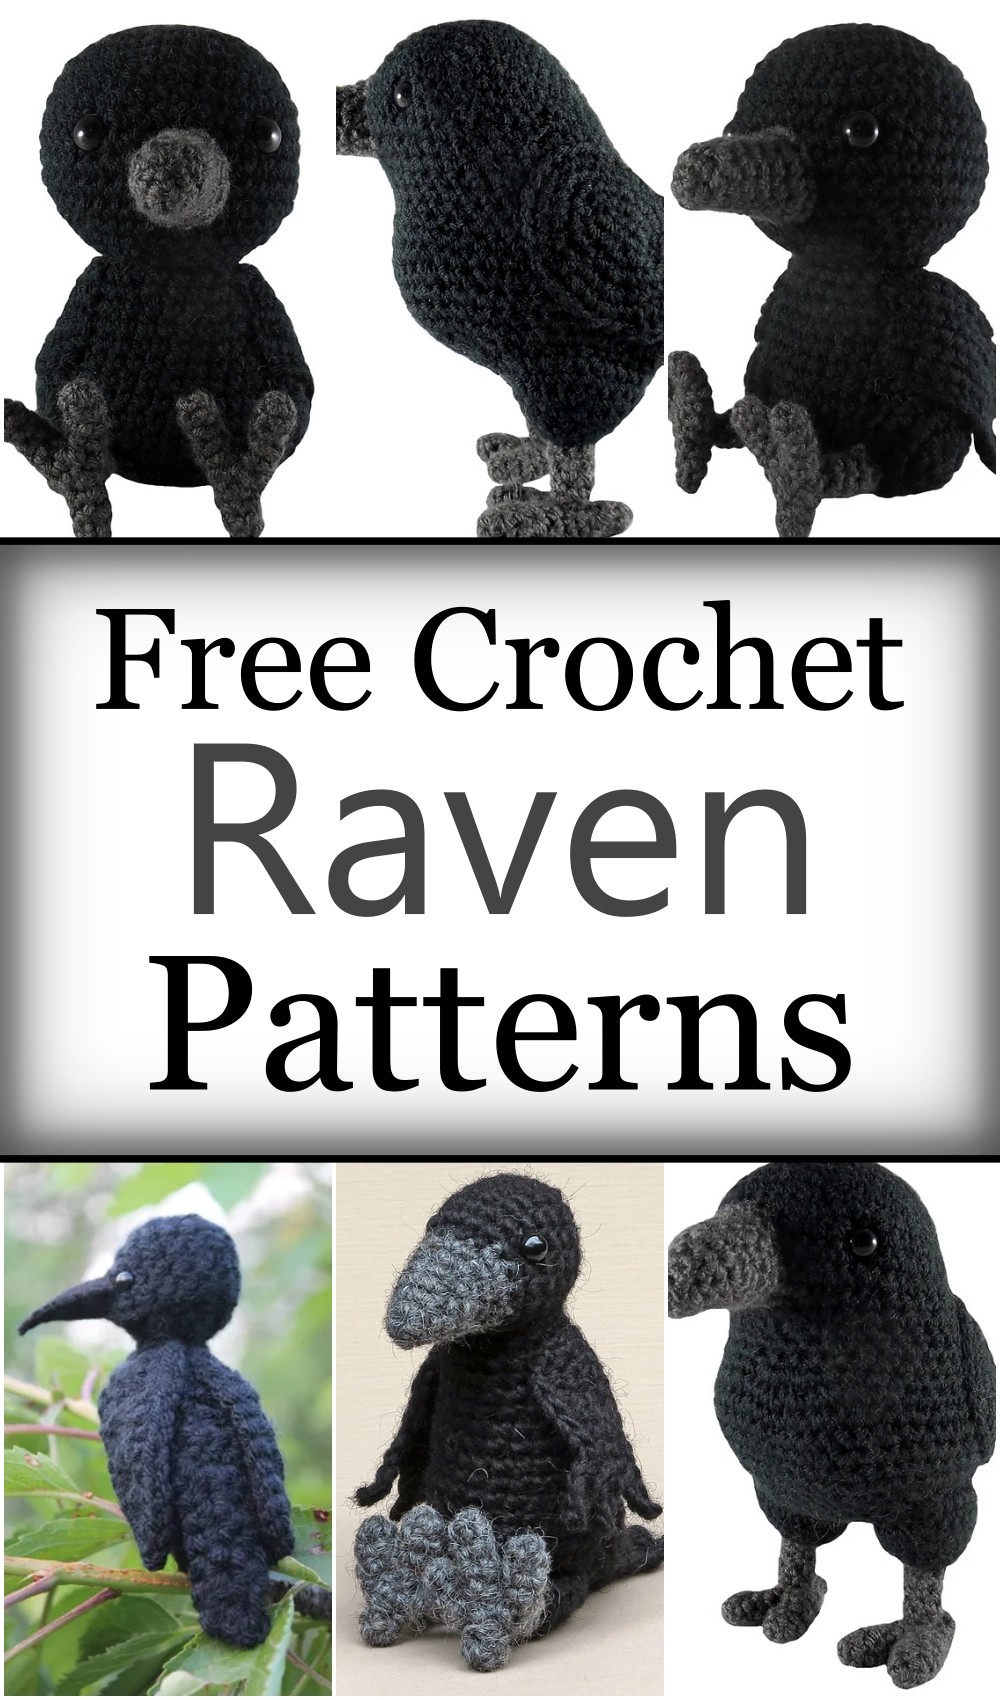 Free Crochet Raven Patterns